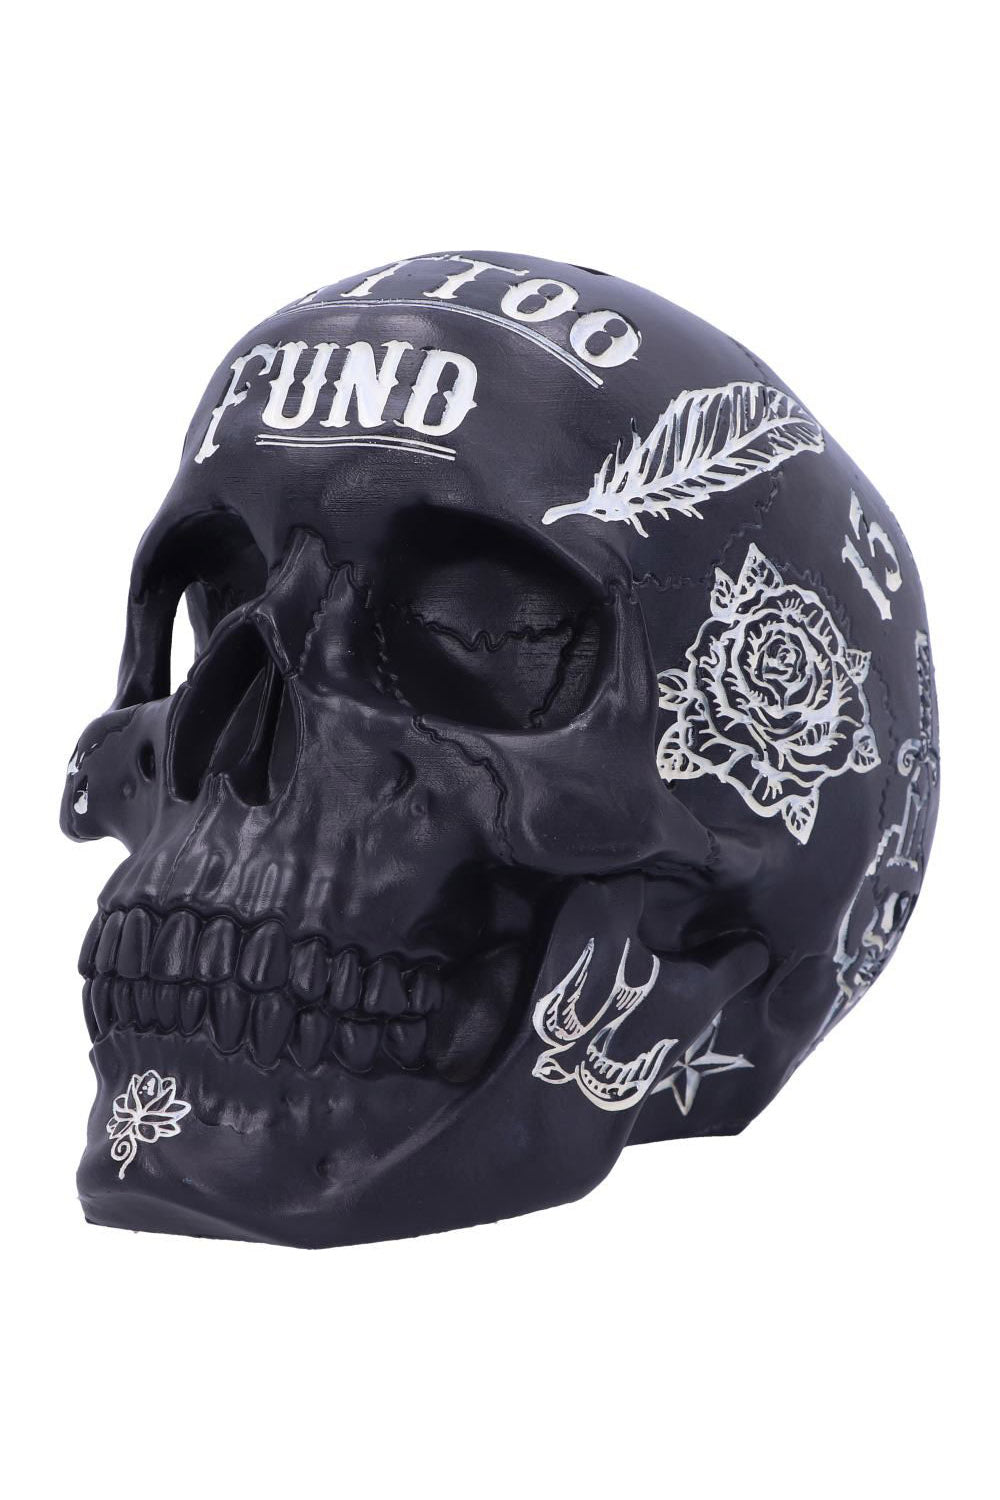 Tattoo Fund Skull Bank [BLACK]